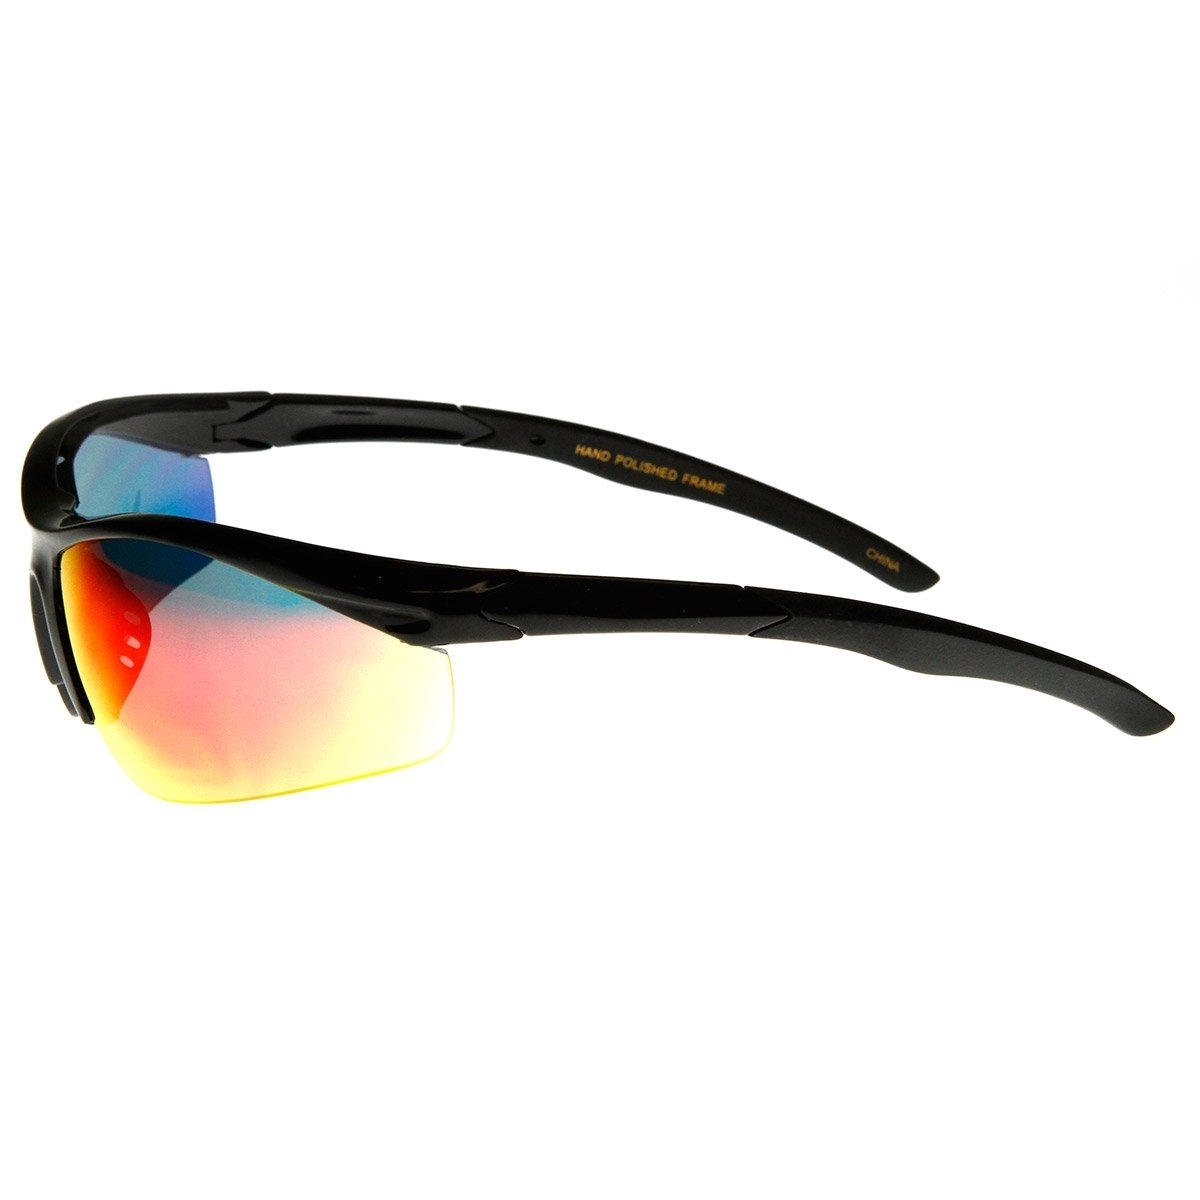 High Quality Semi-Rimless Running Cycling Sports Wrap Sunglasses - Black Ice+Black Fire+Case